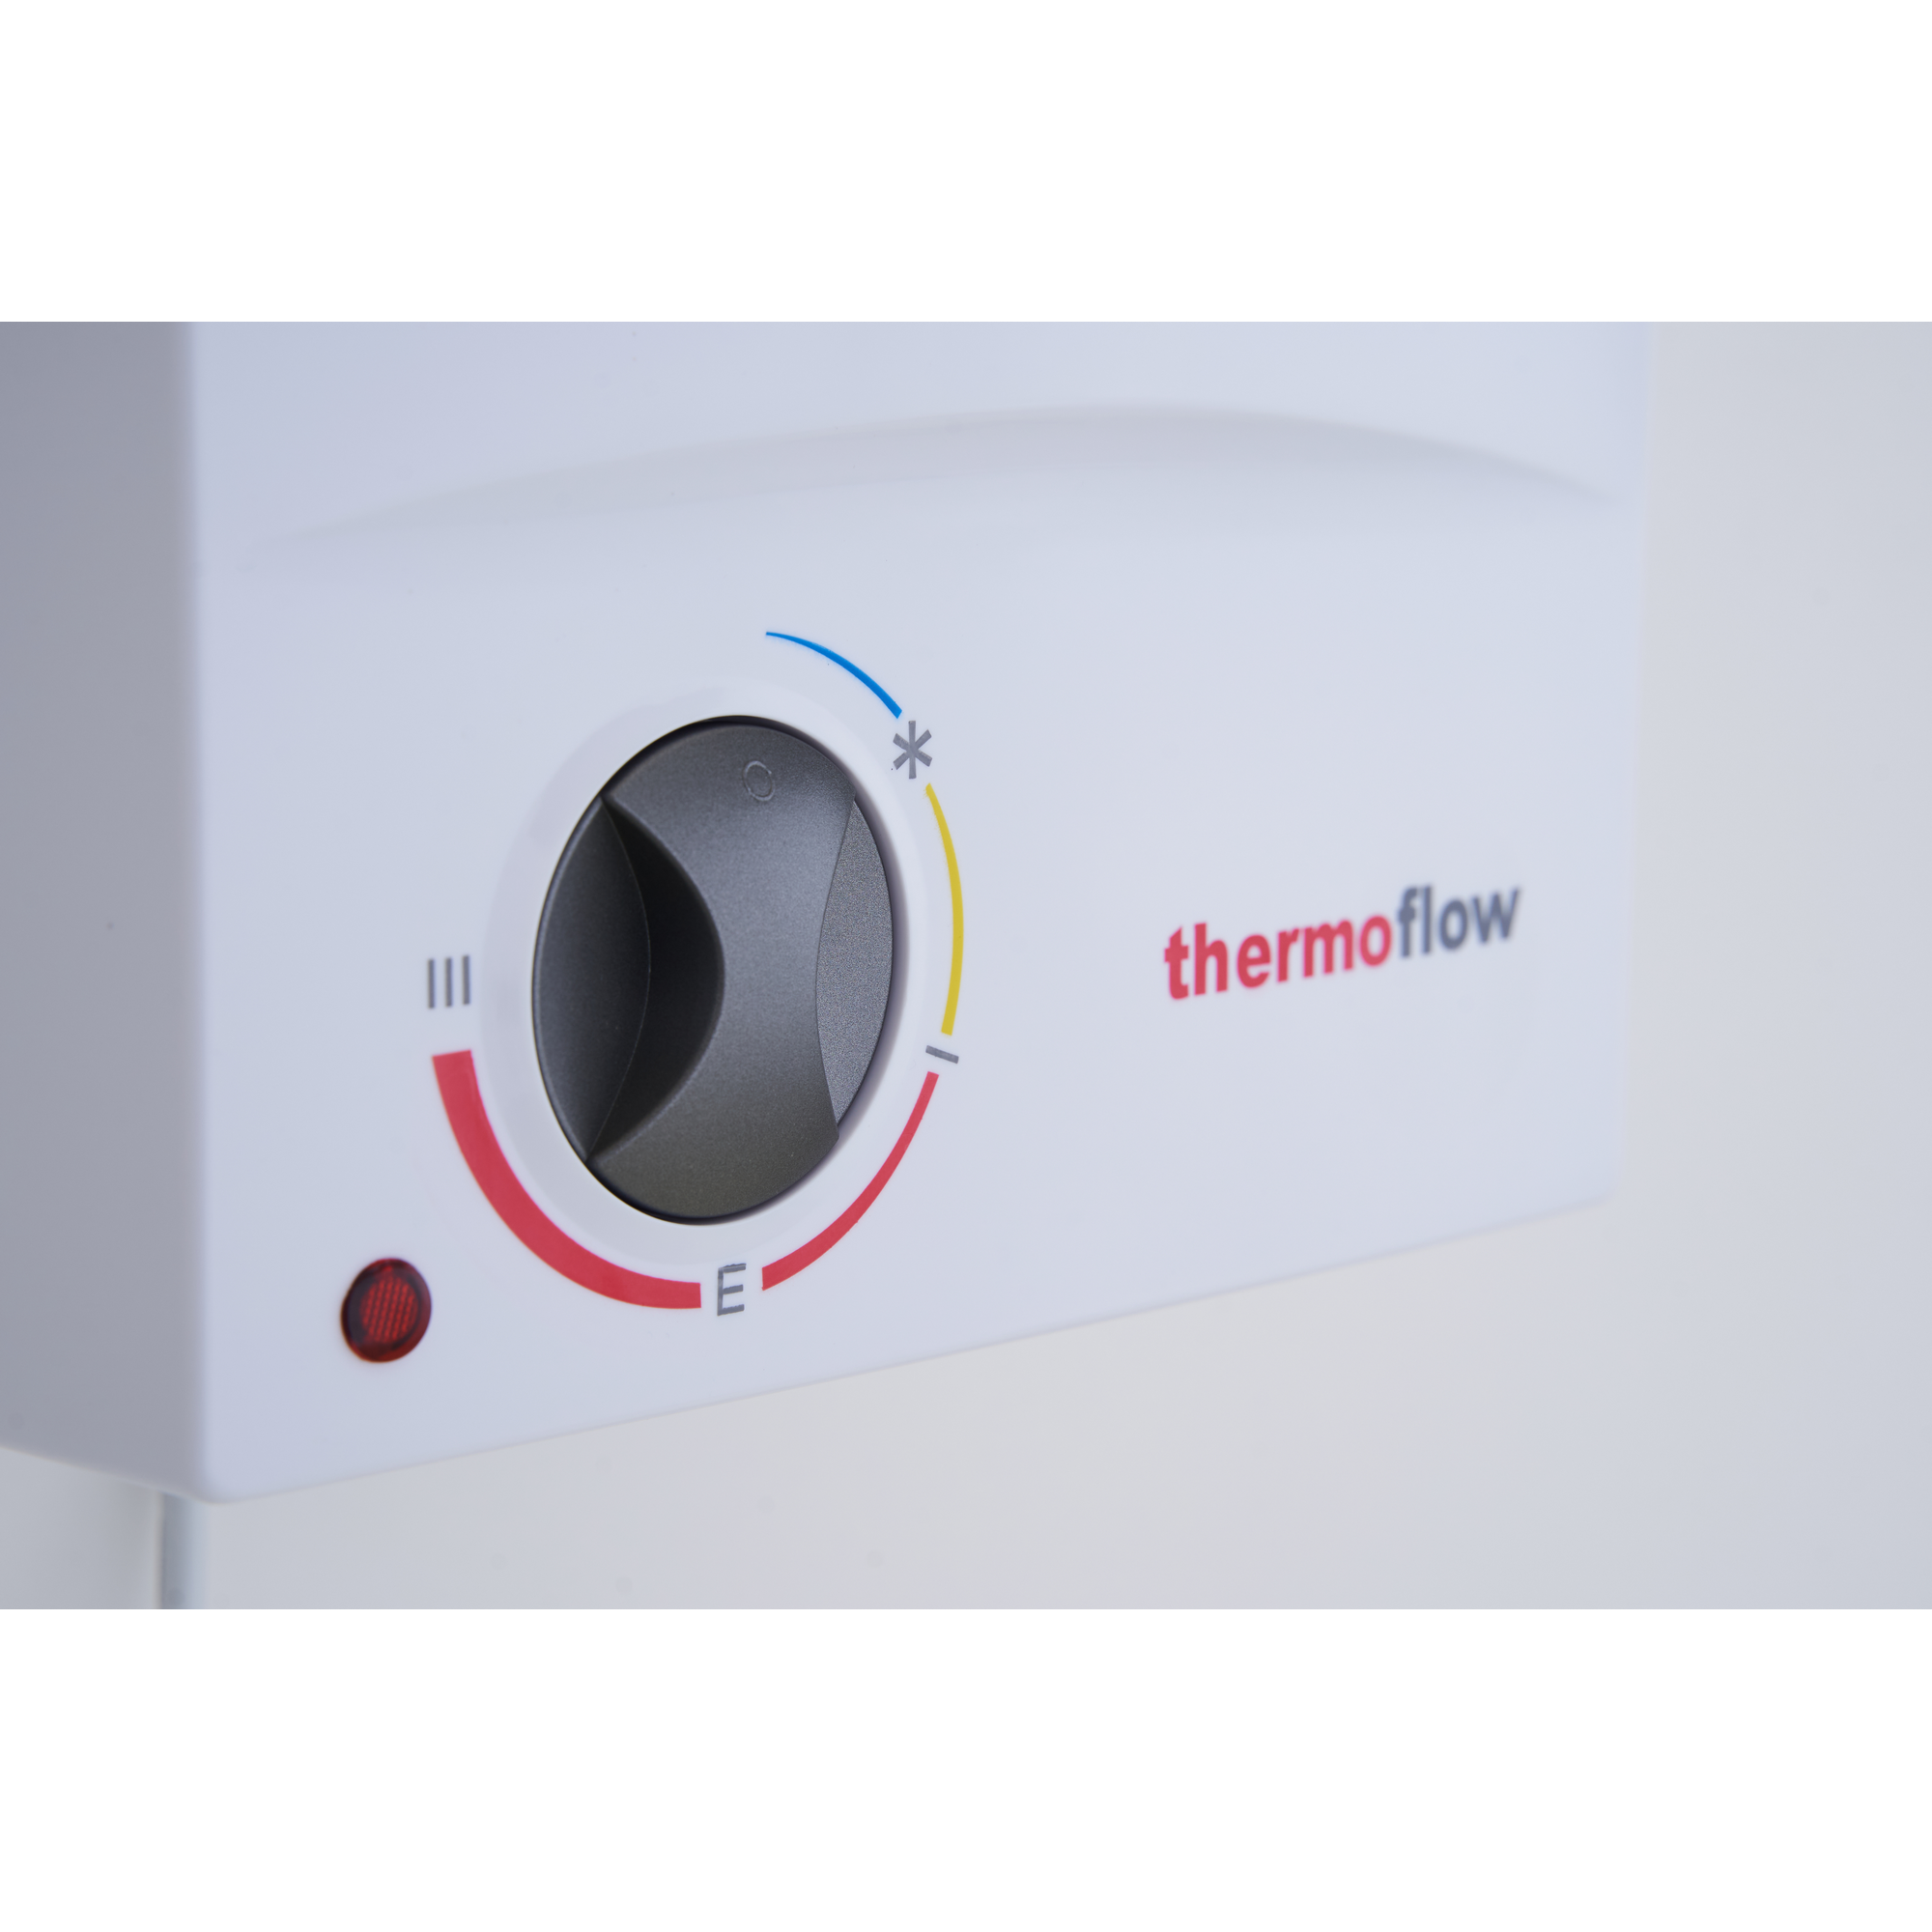 Obertischspeicher 'Thermoflow OT 5 N' 2 kW + product picture